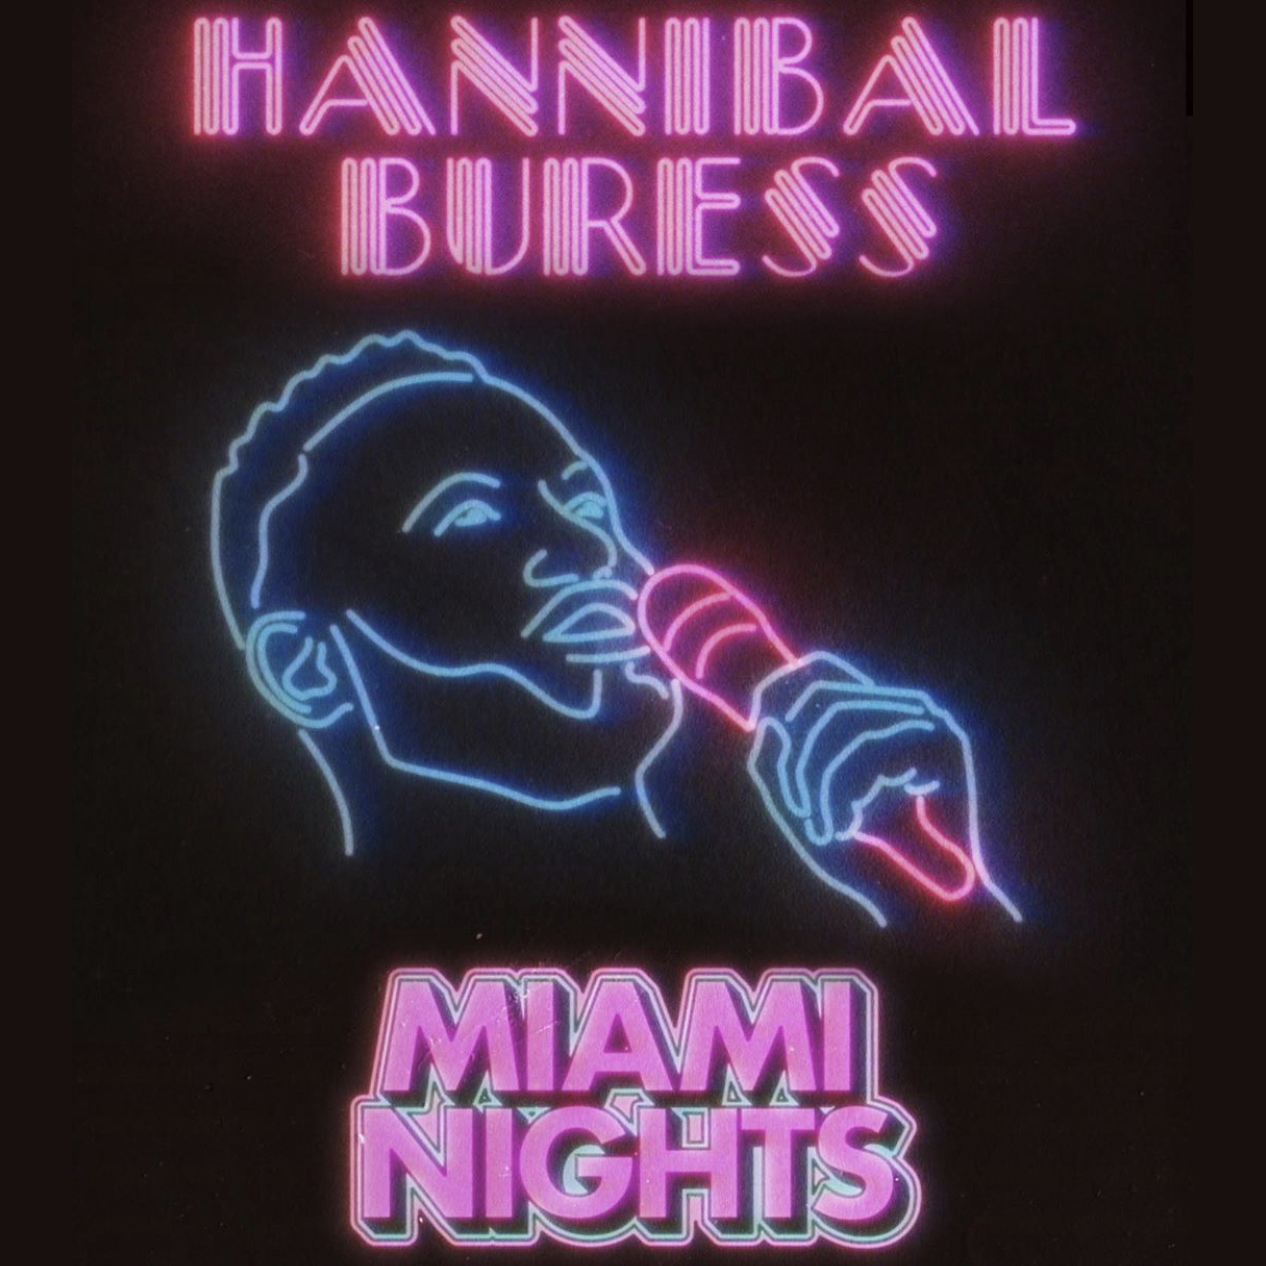 HANNIBEL BURESS - MIAMI NIGHTS